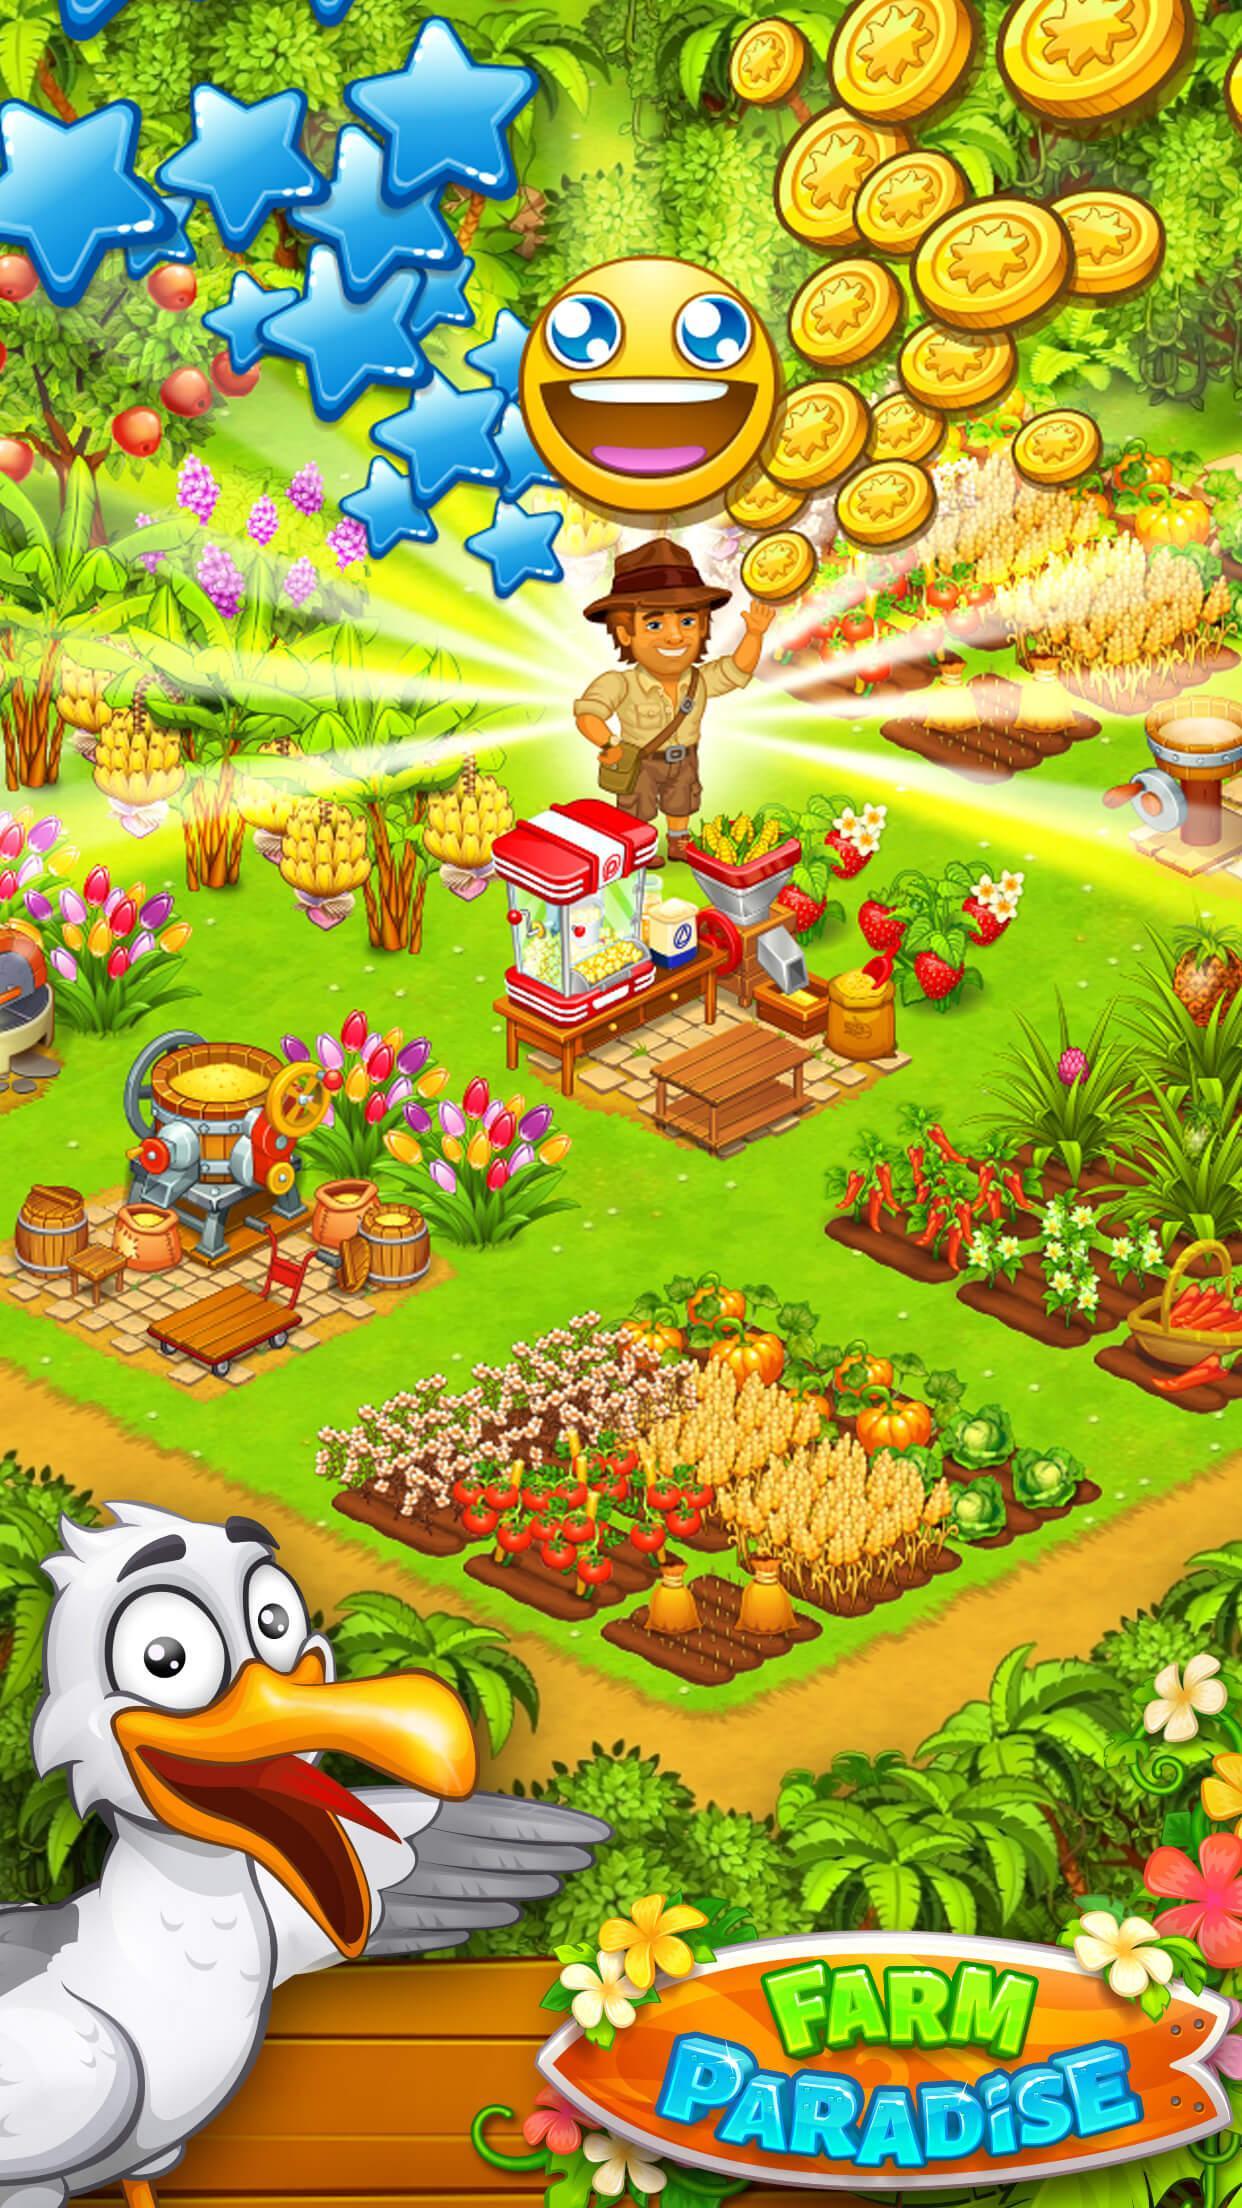 Farm Paradise Fun farm trade game at lost island 2.17 Screenshot 3